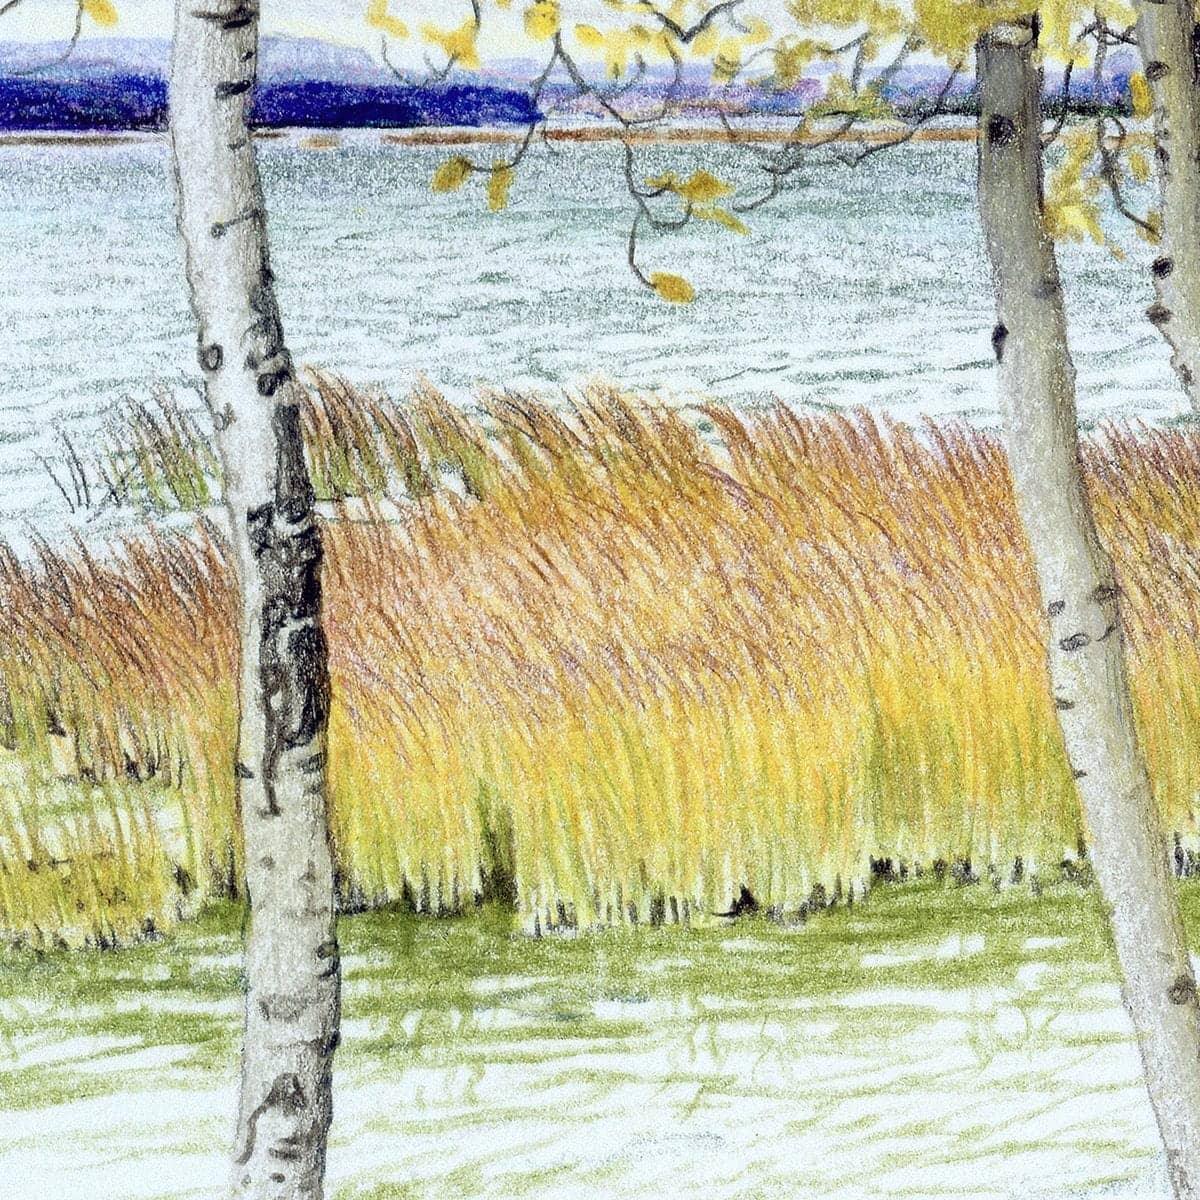 Lac Cardinal Peace River - Art Print | Artwork by Glen Loates